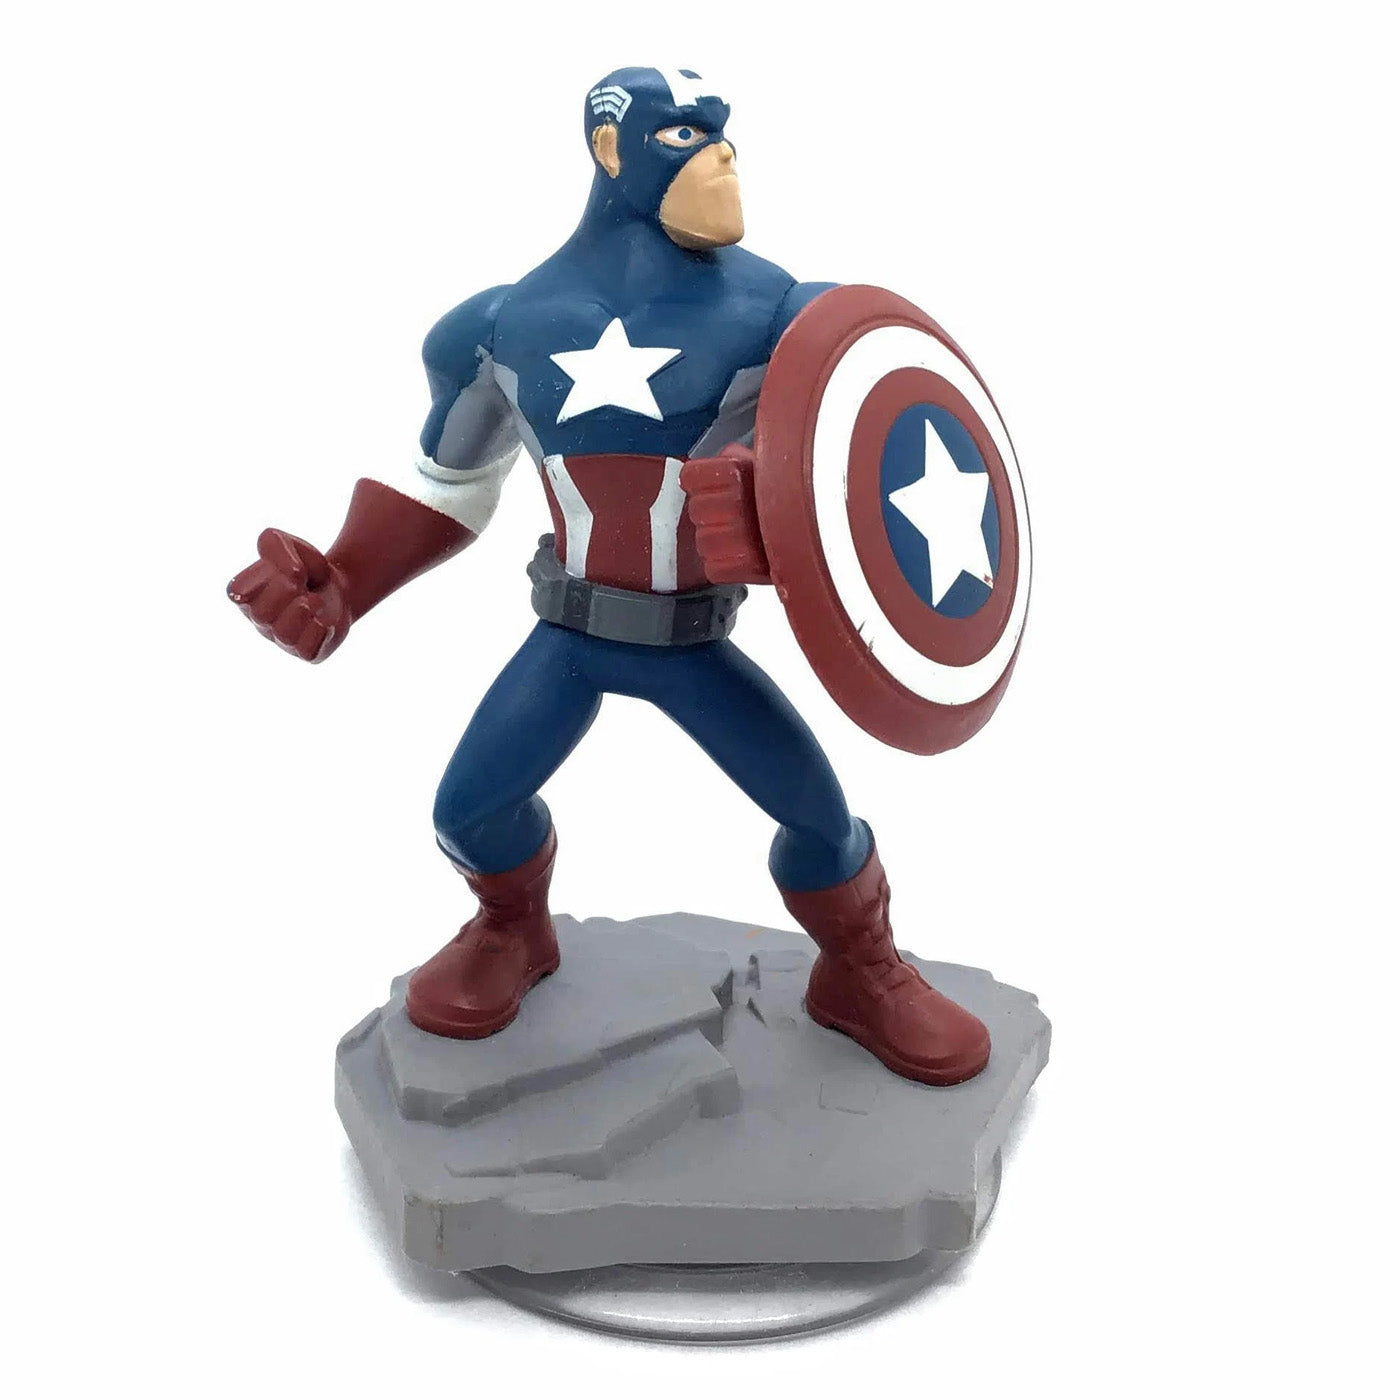 Disney Infinity 2.0 Character: Captain America